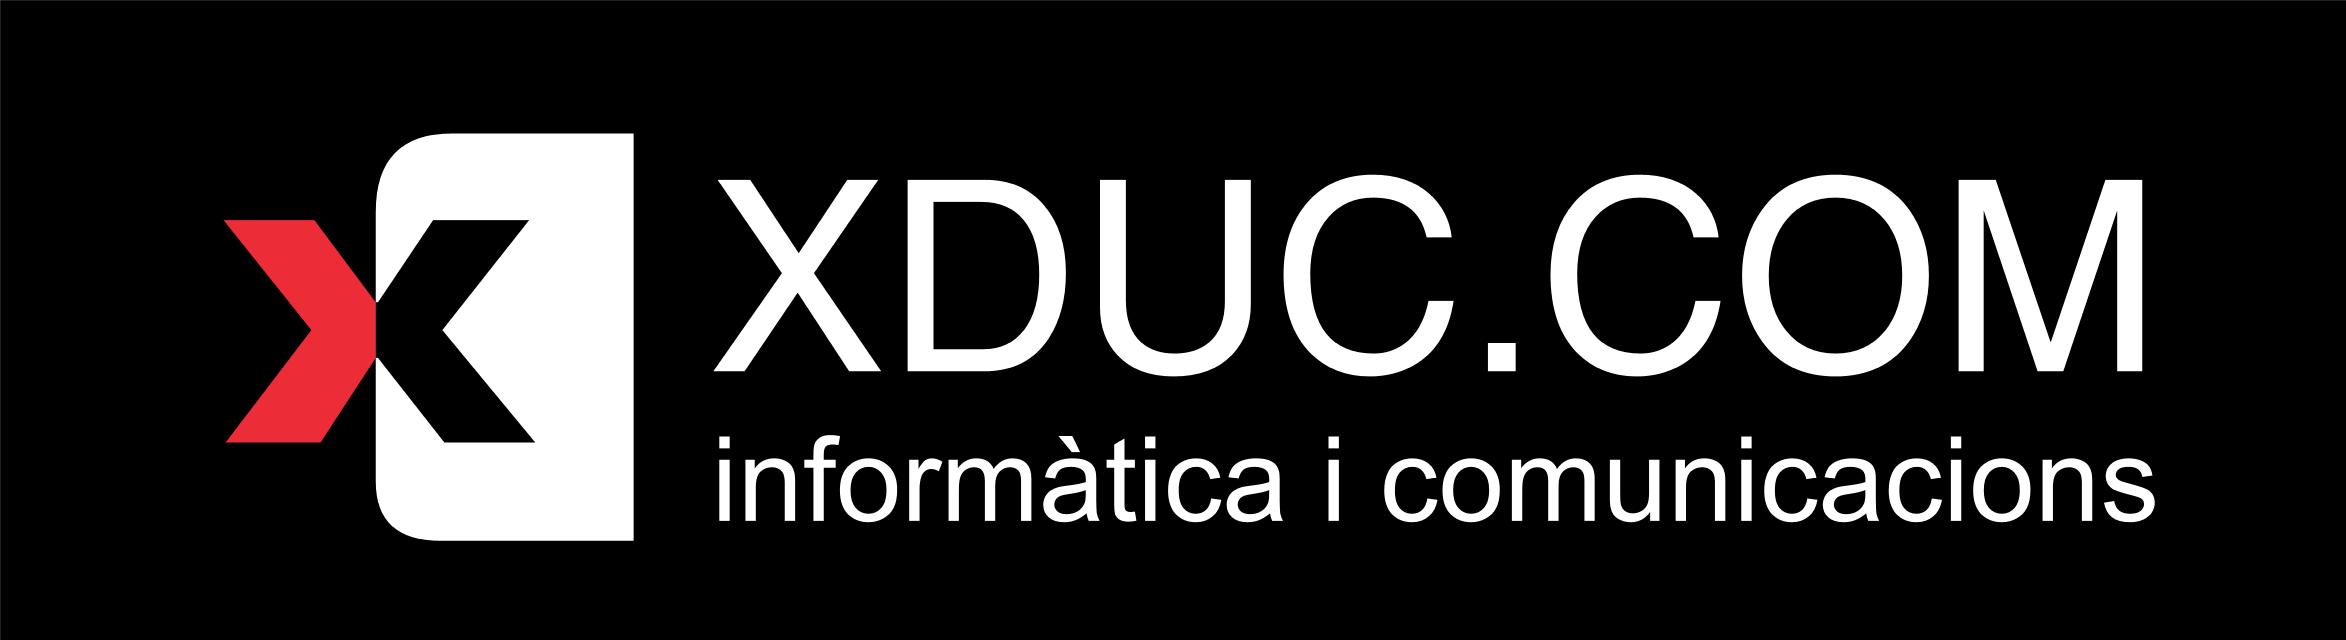 XDUC.COM